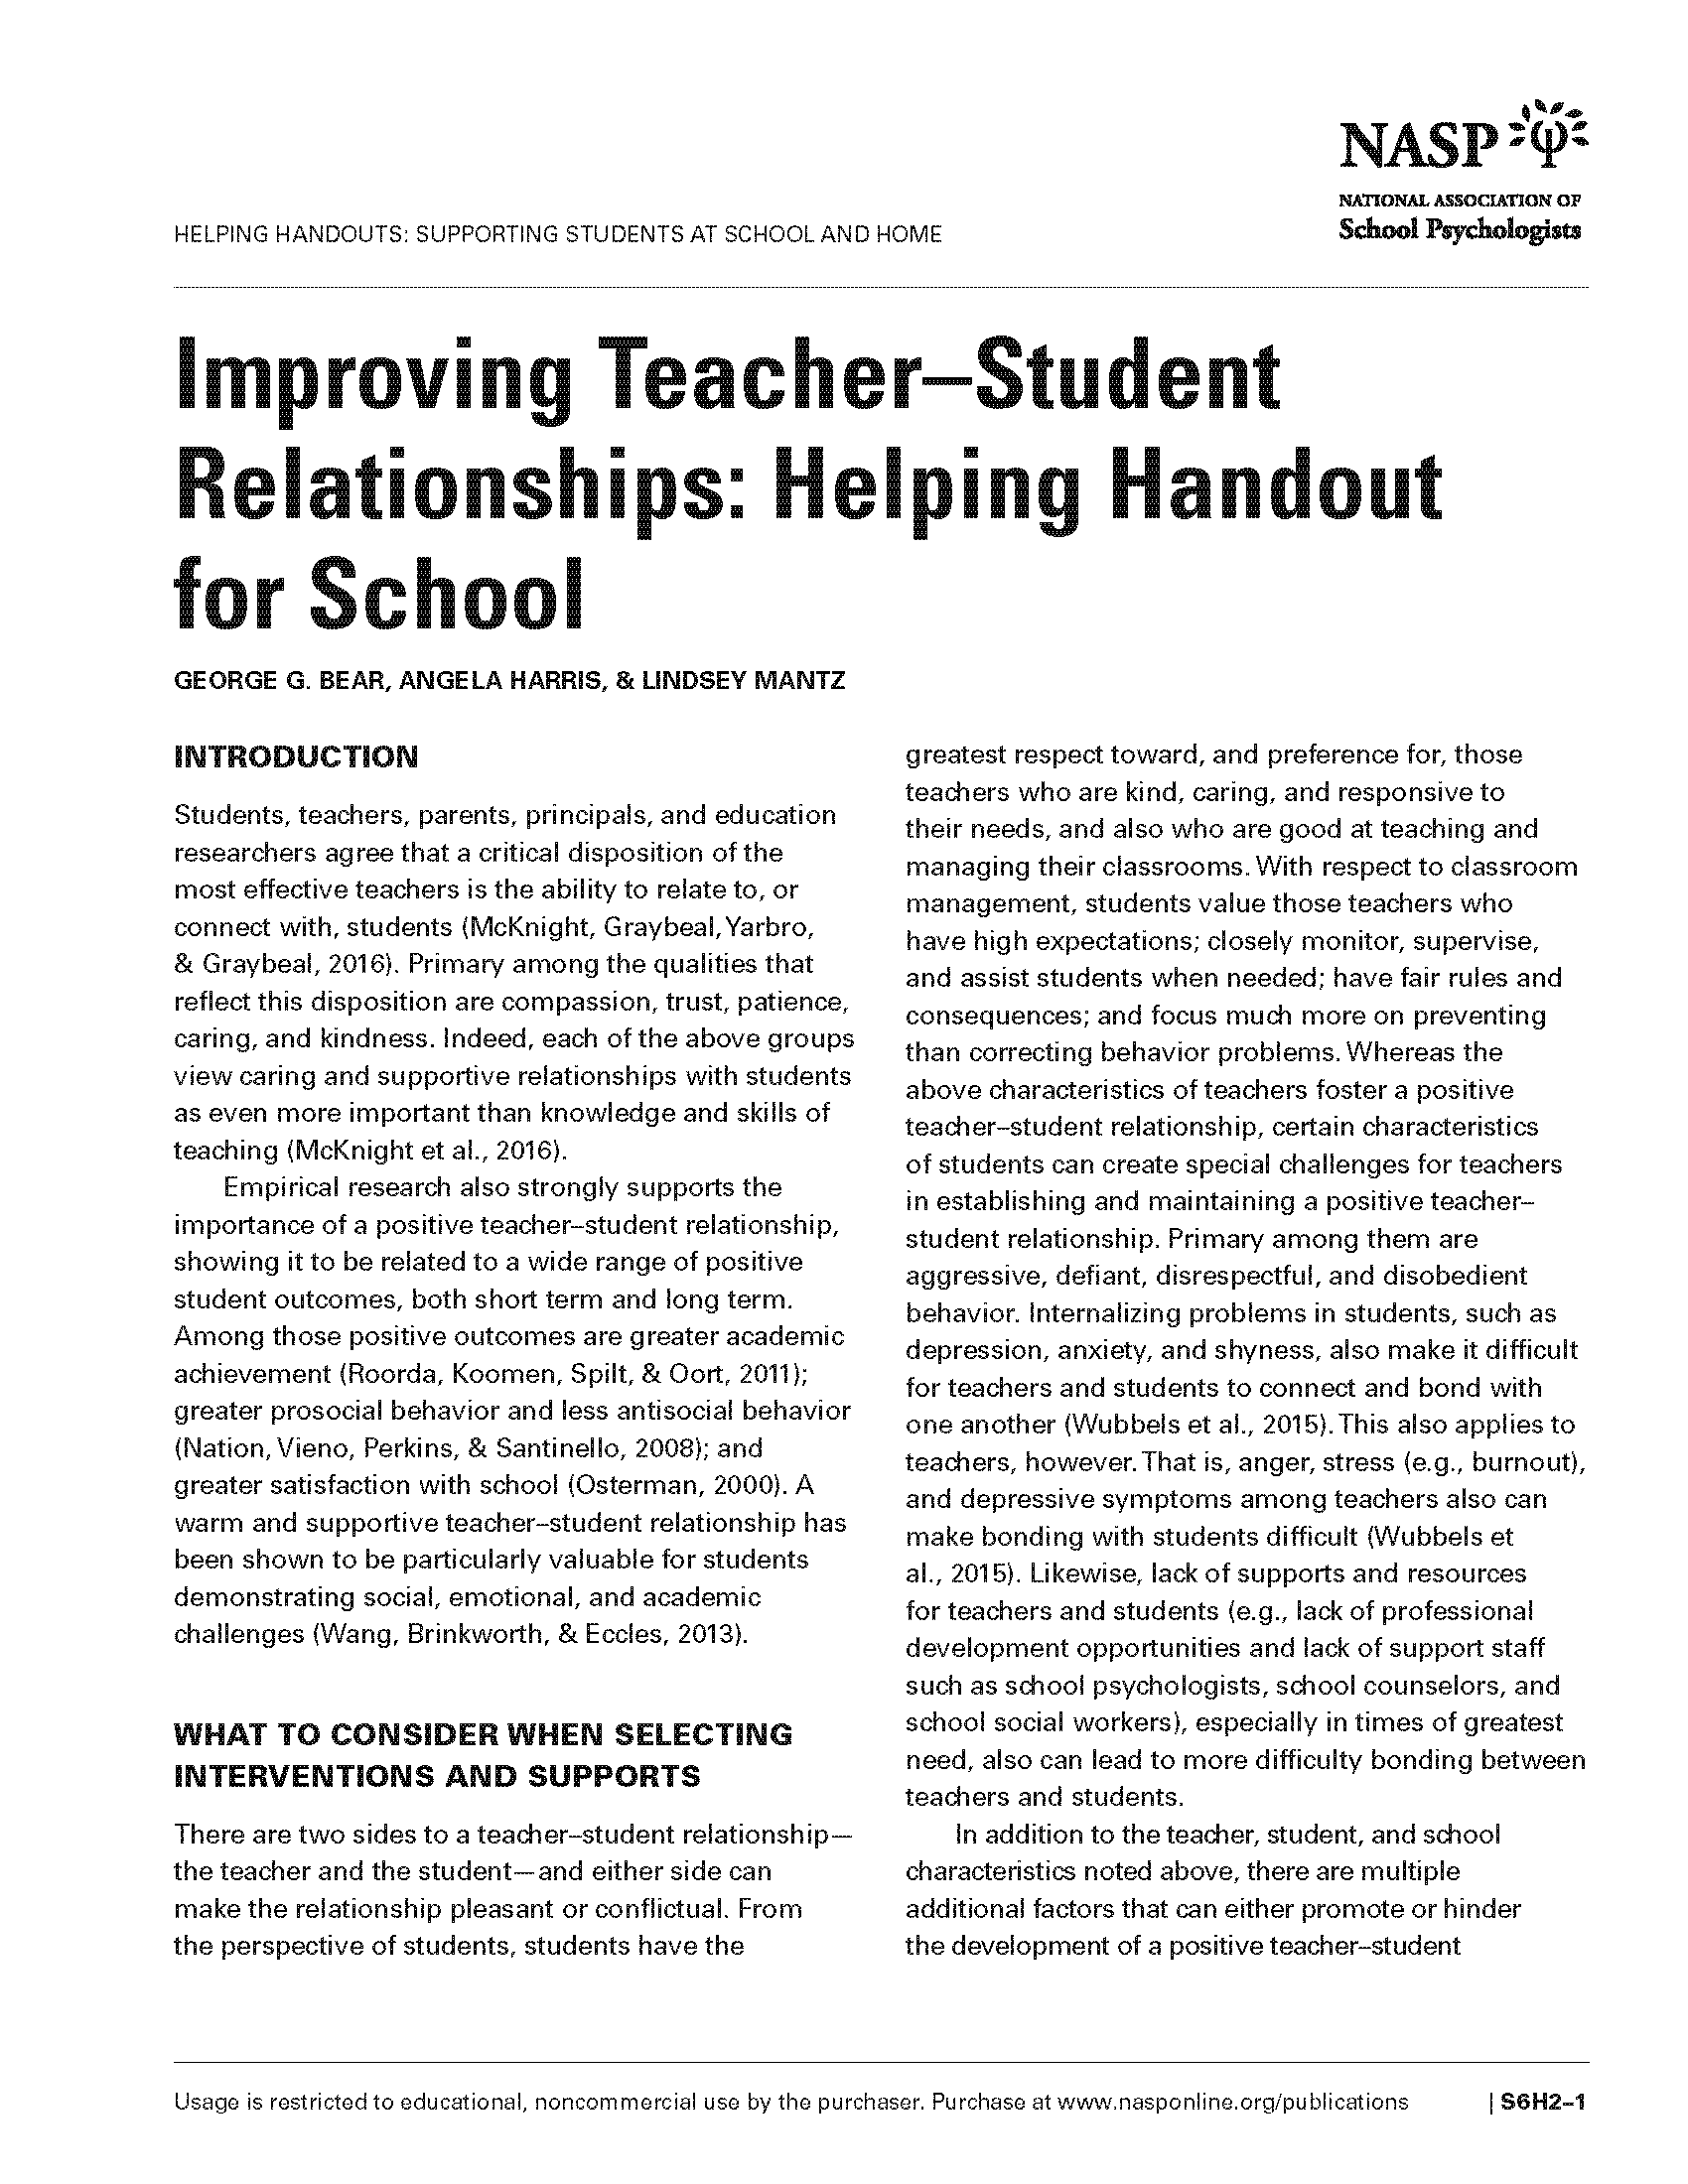 Improving Teacher–Student Relationships: Helping Handout for School